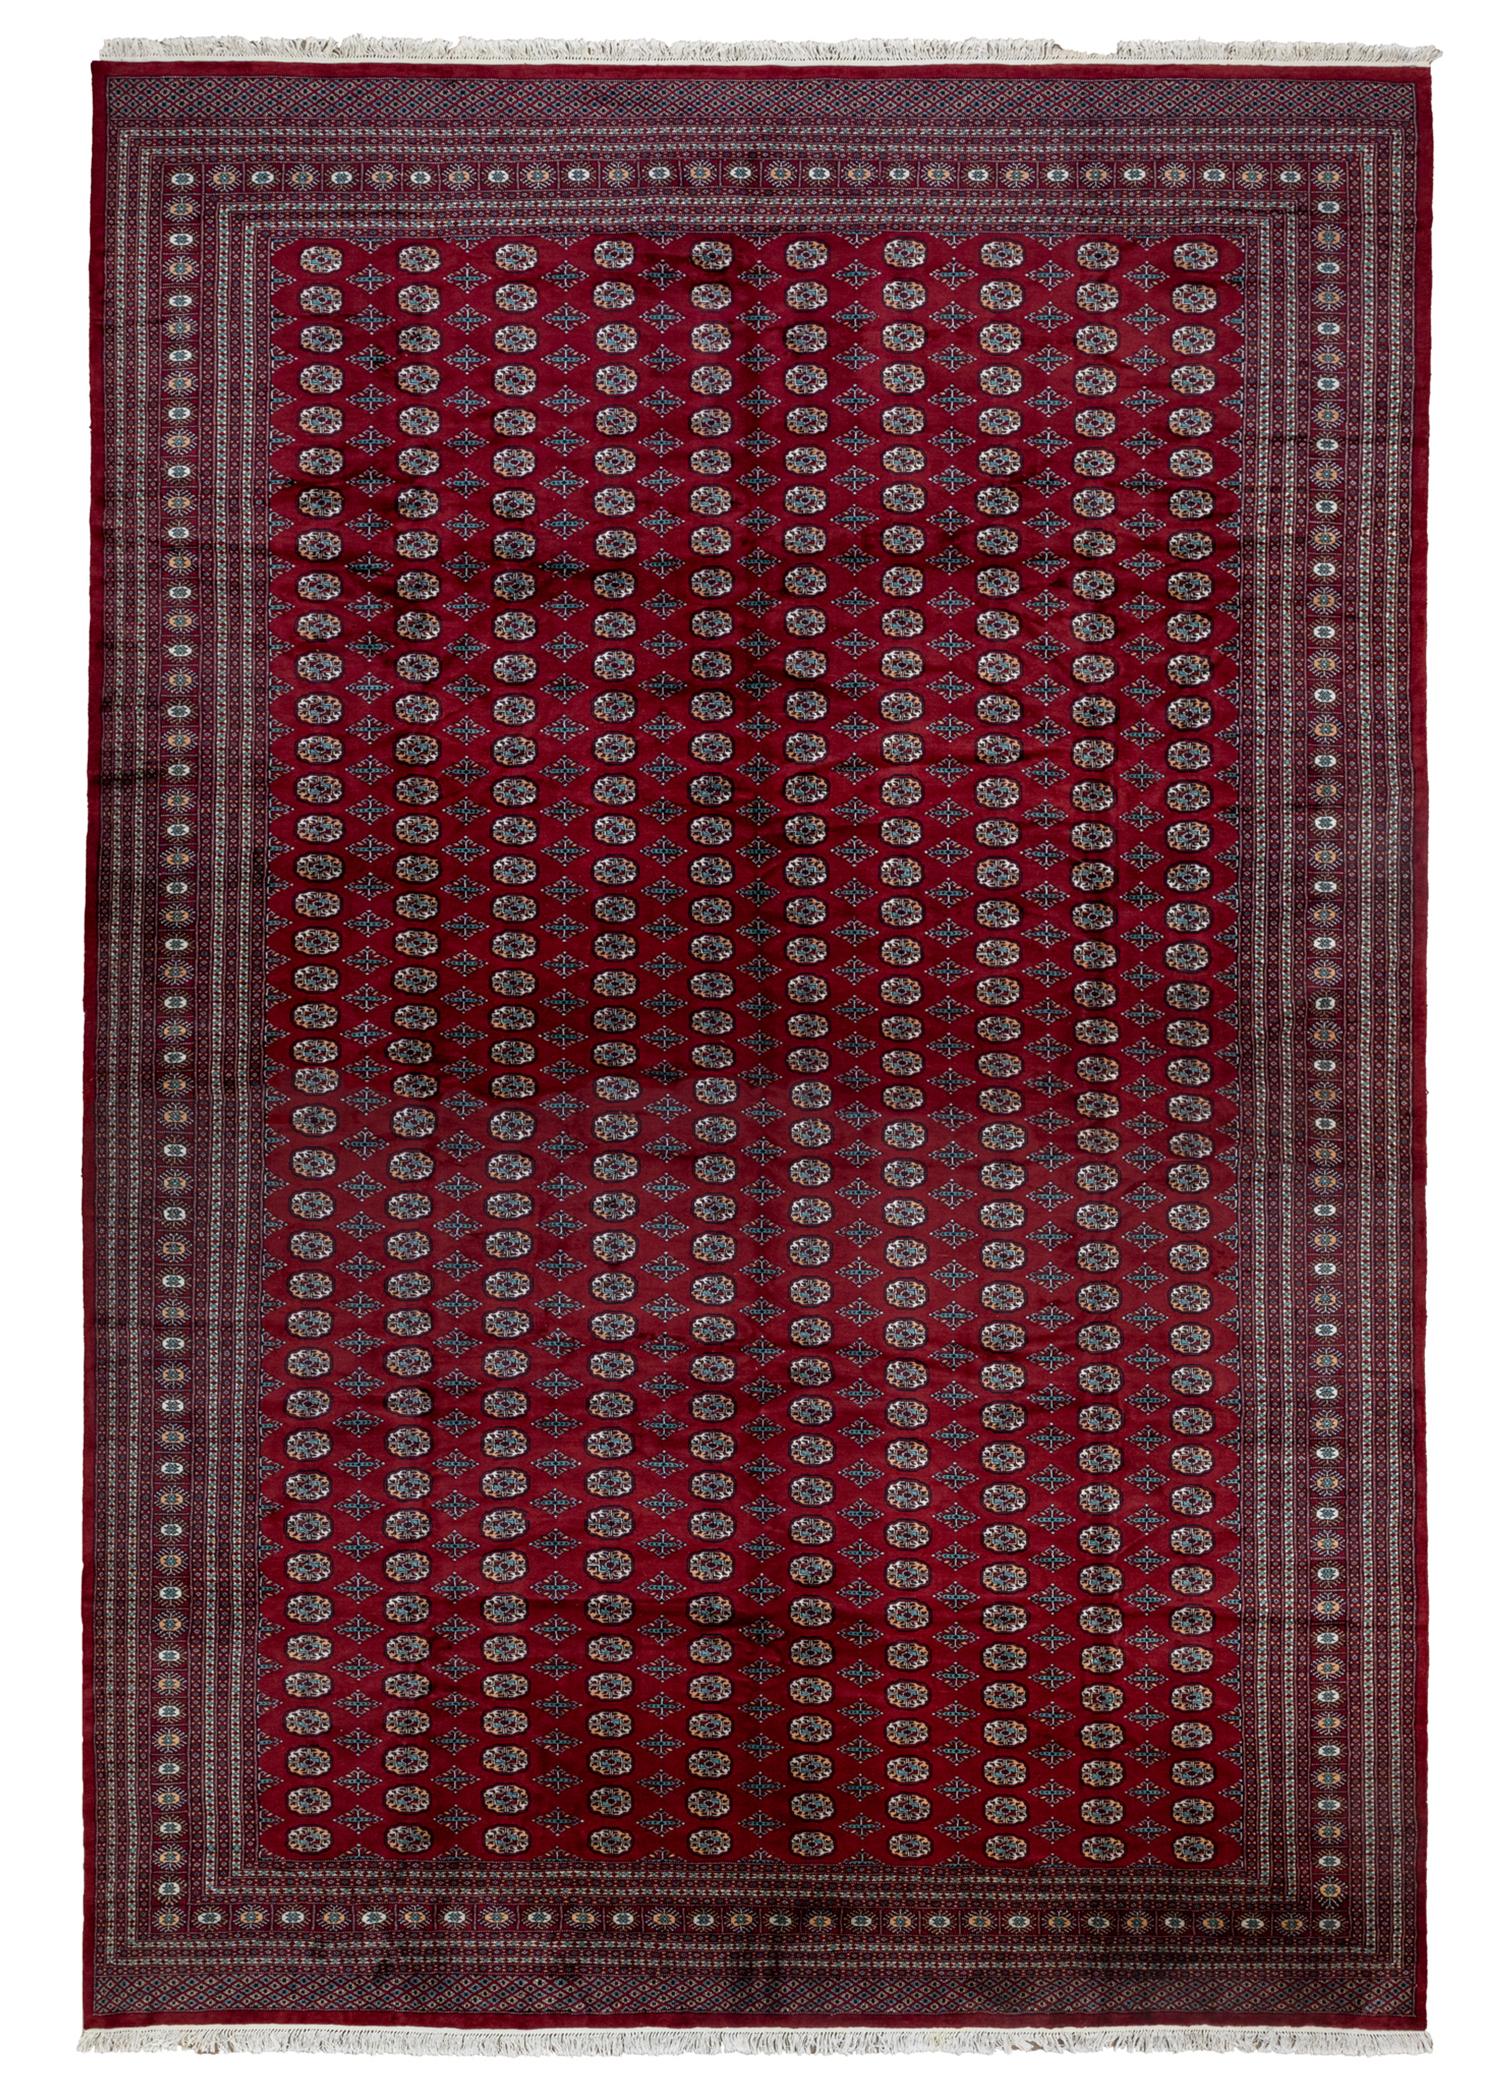 Tilla Traditional Turkmen Patterned Hand Woven Turkmen Carpet 365x555 cm